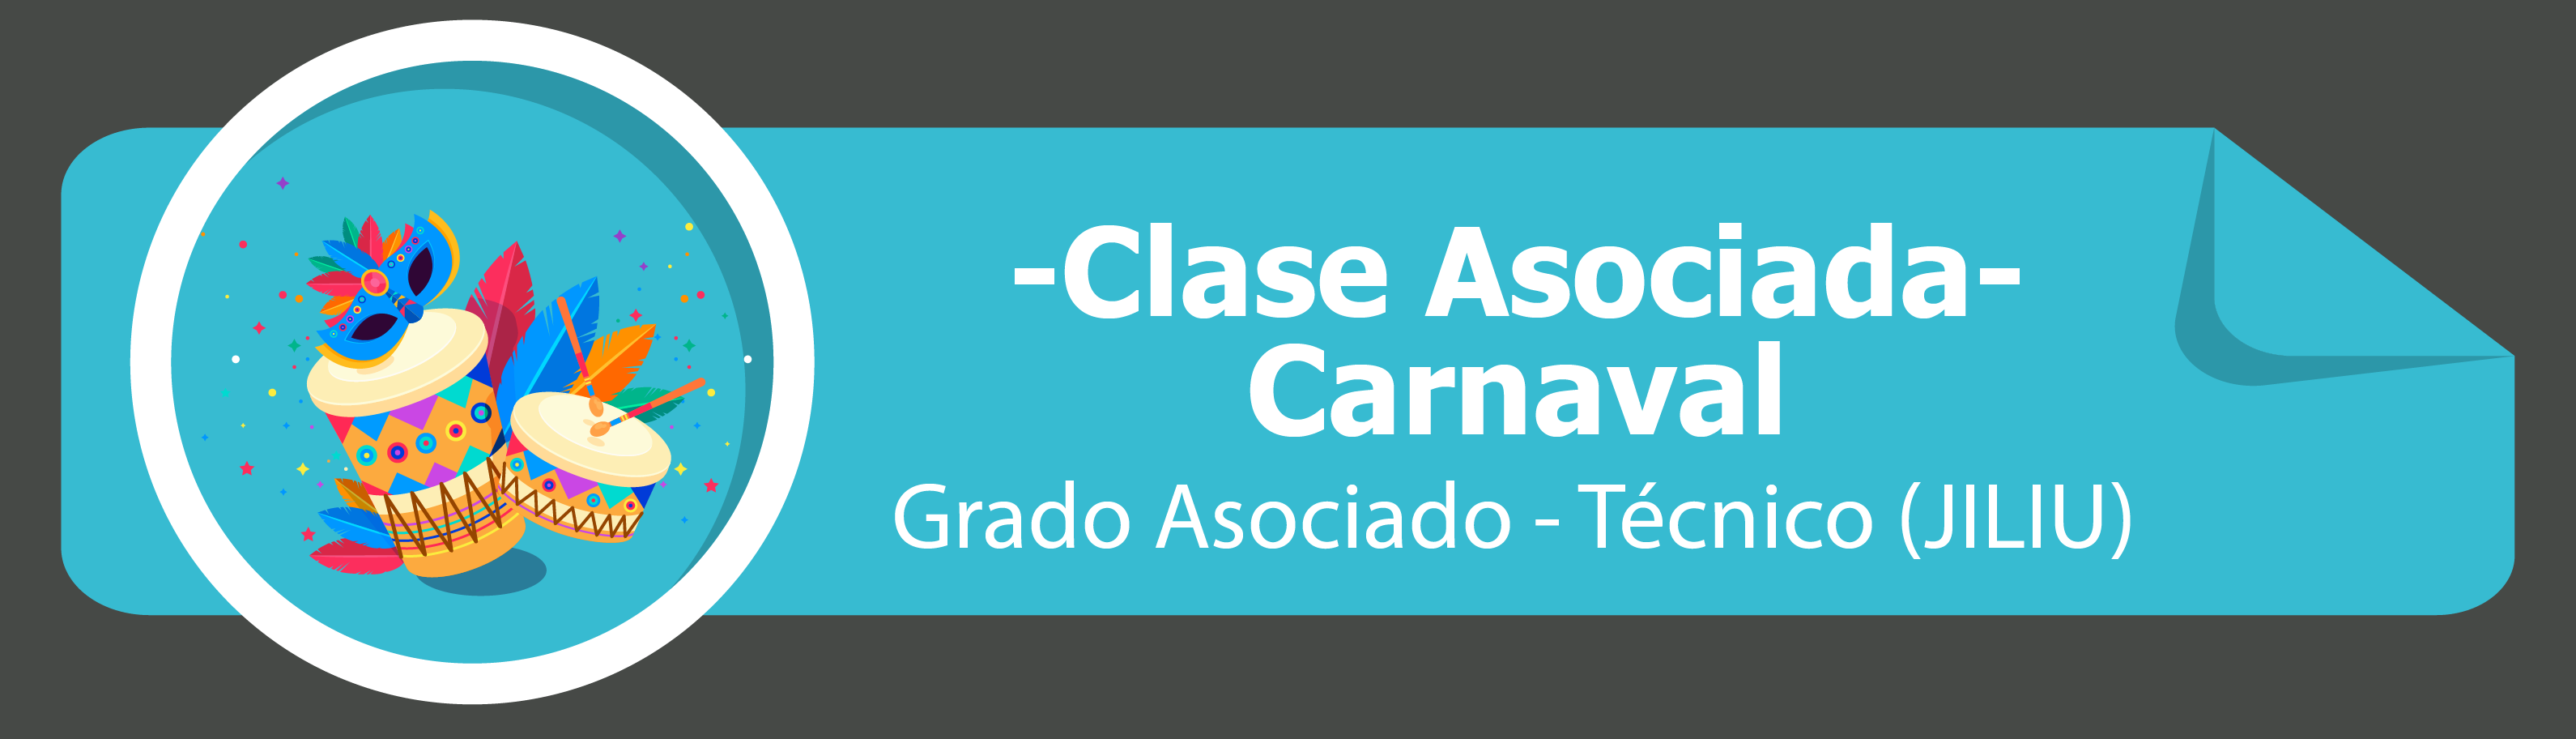 Clase Asociada - Carnaval